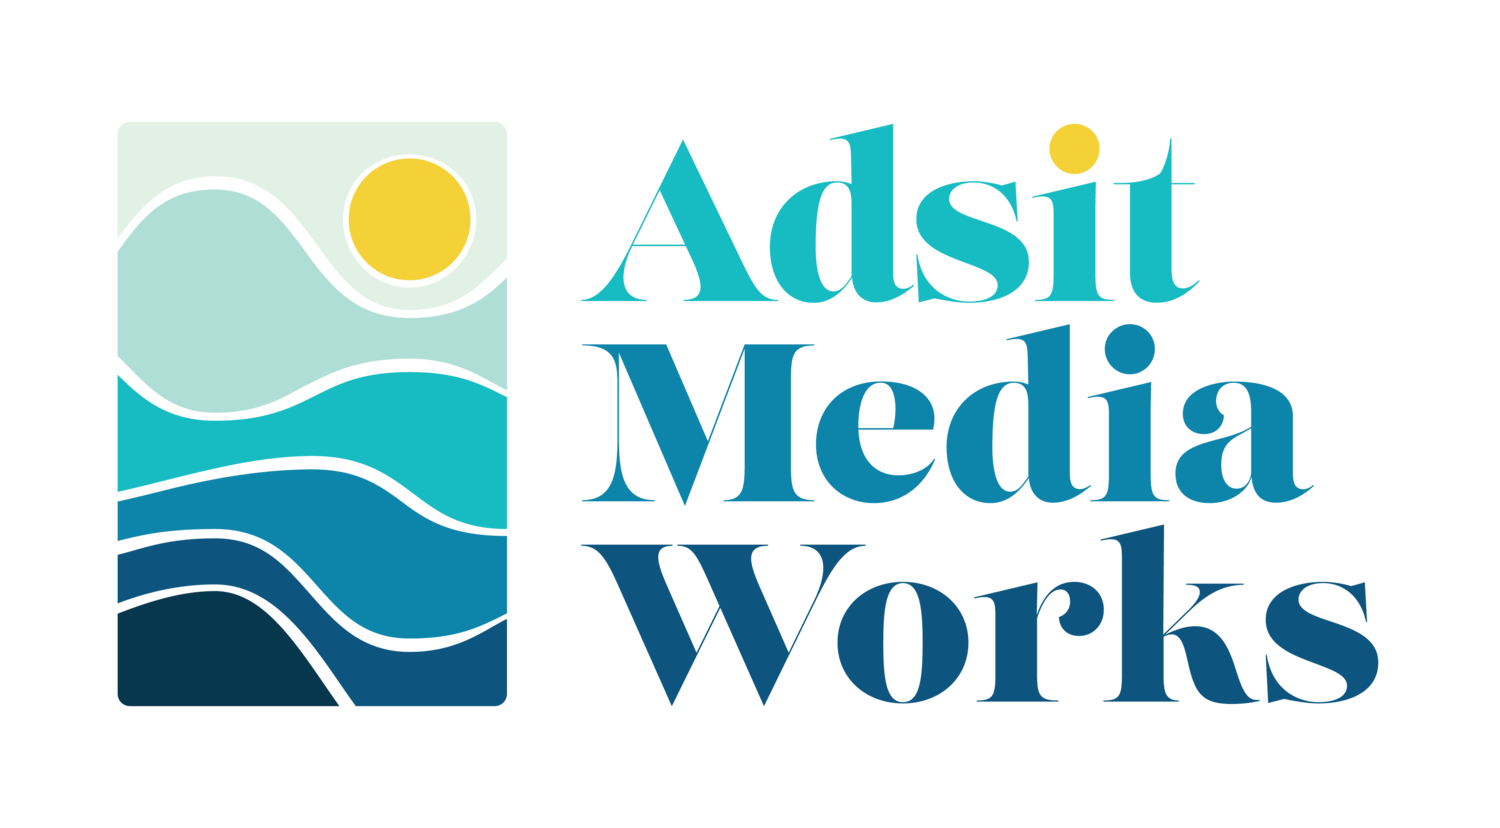 Adsit Media Works